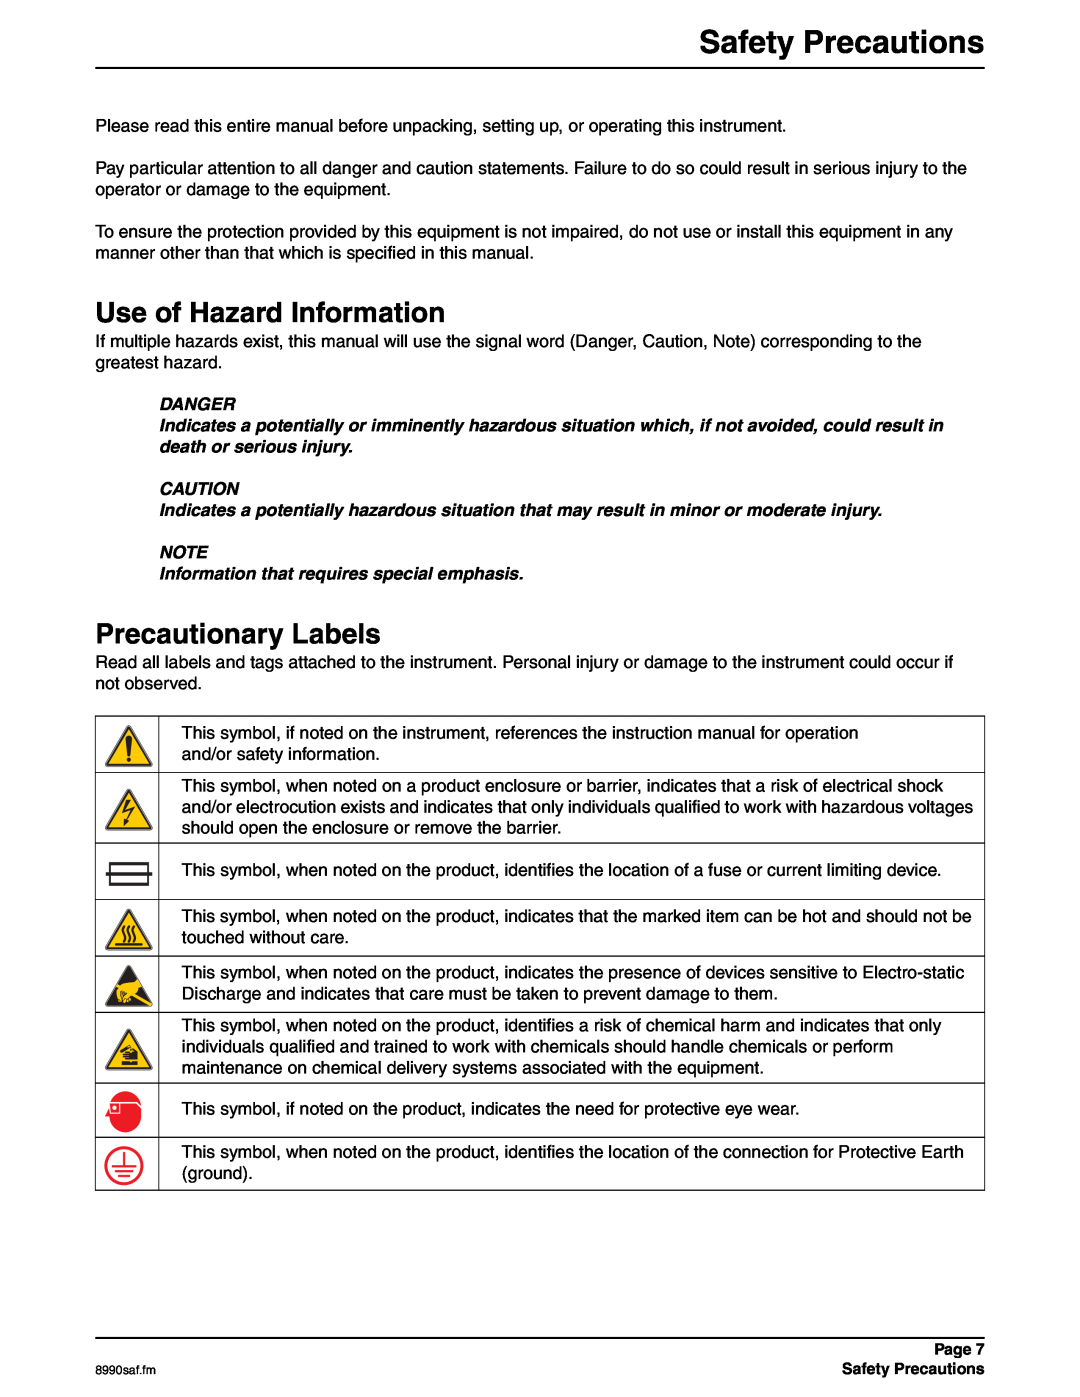 Hach 900 MAX manual Safety Precautions, Use of Hazard Information, Precautionary Labels 